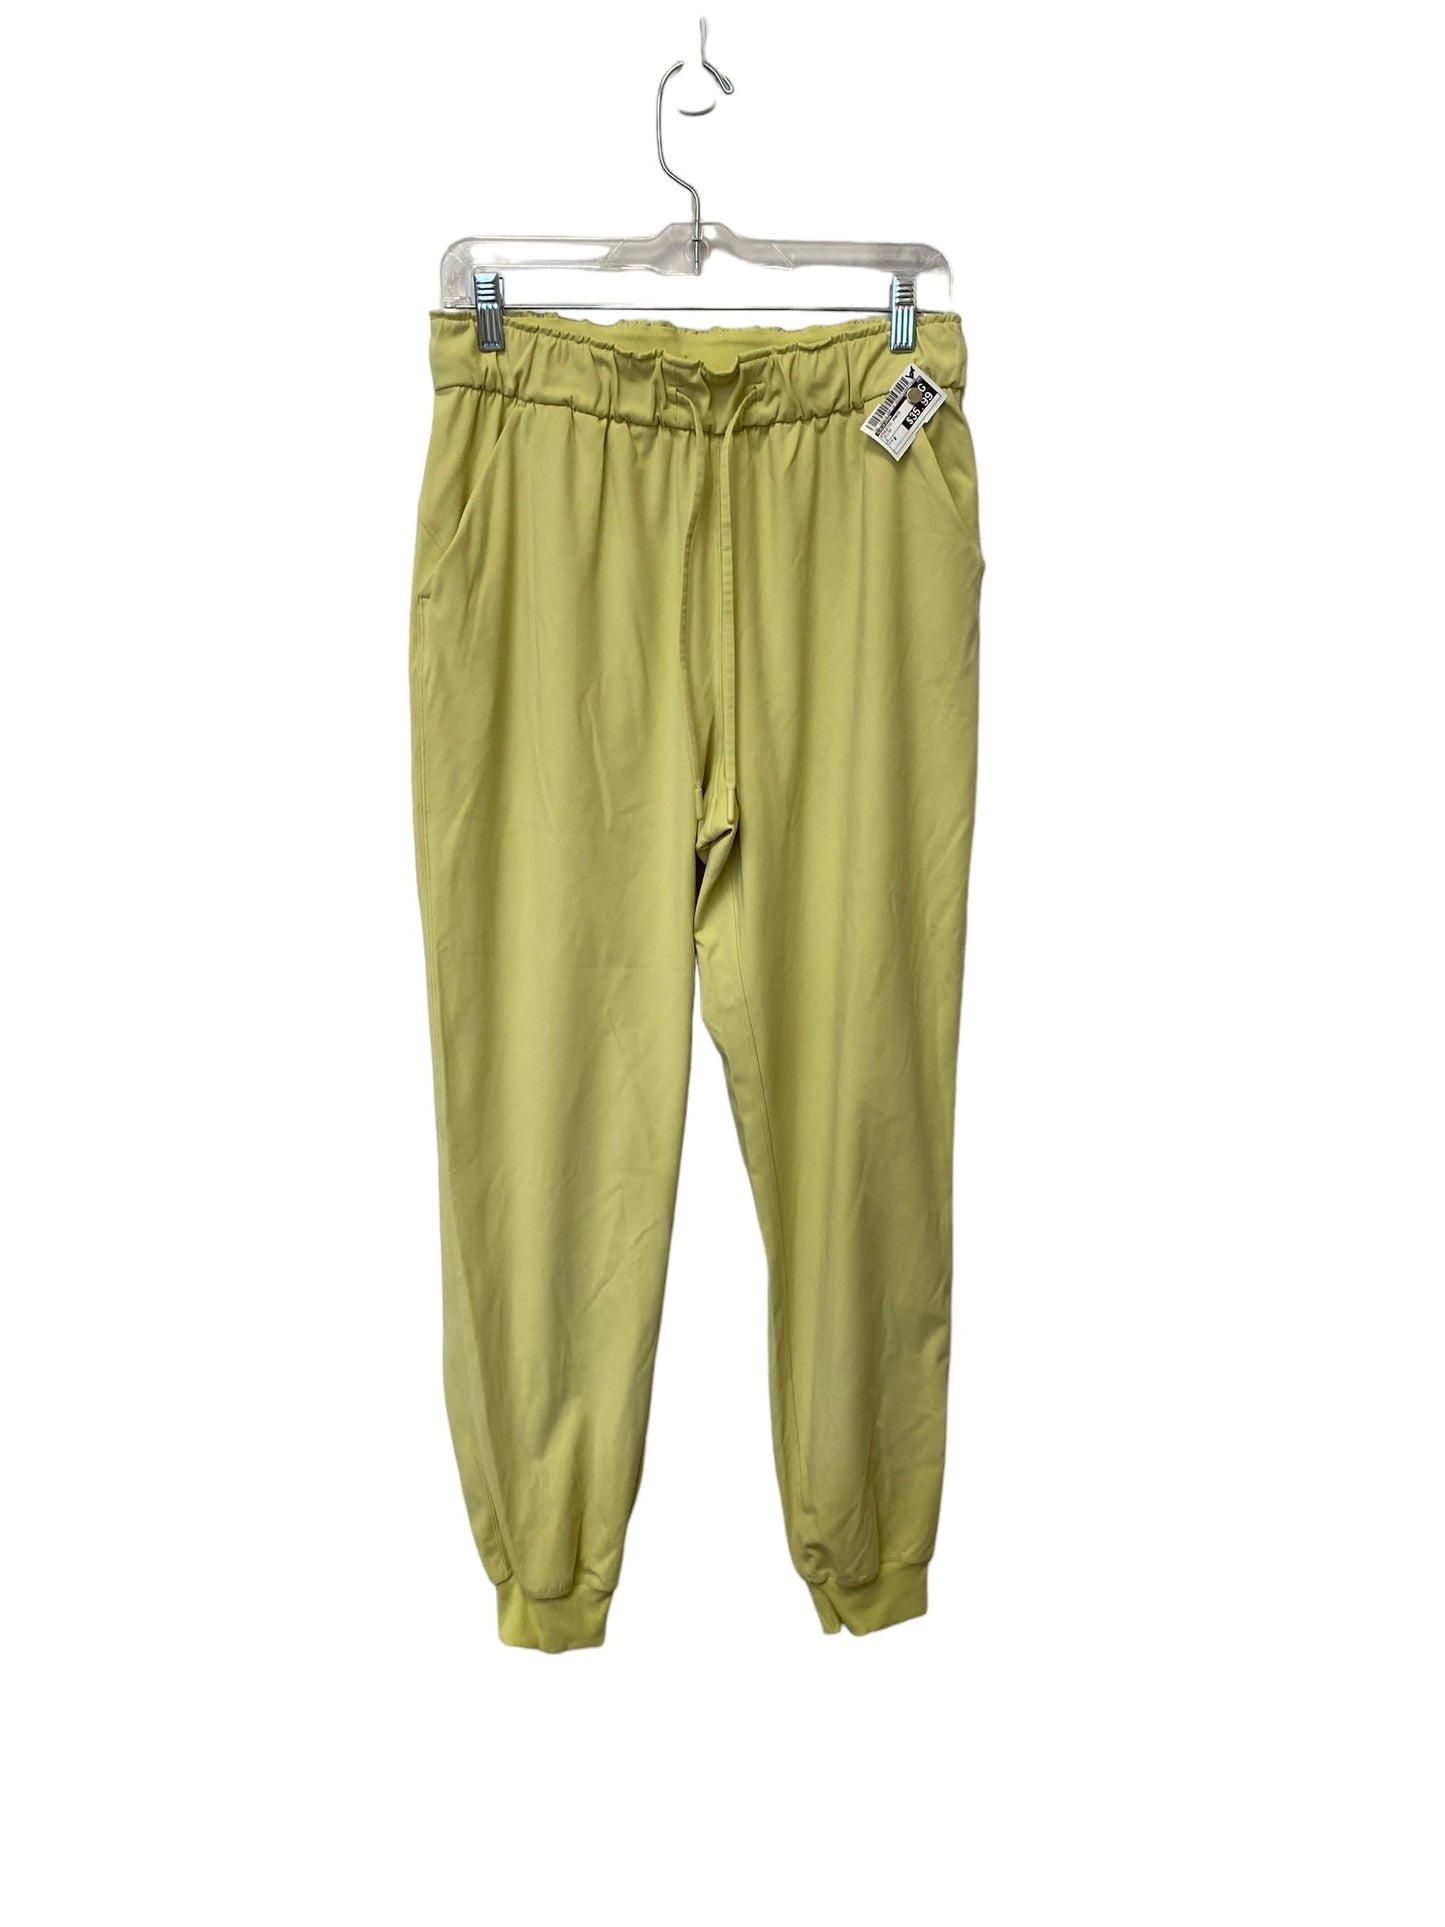 Yellow Athletic Pants Lululemon, Size 8